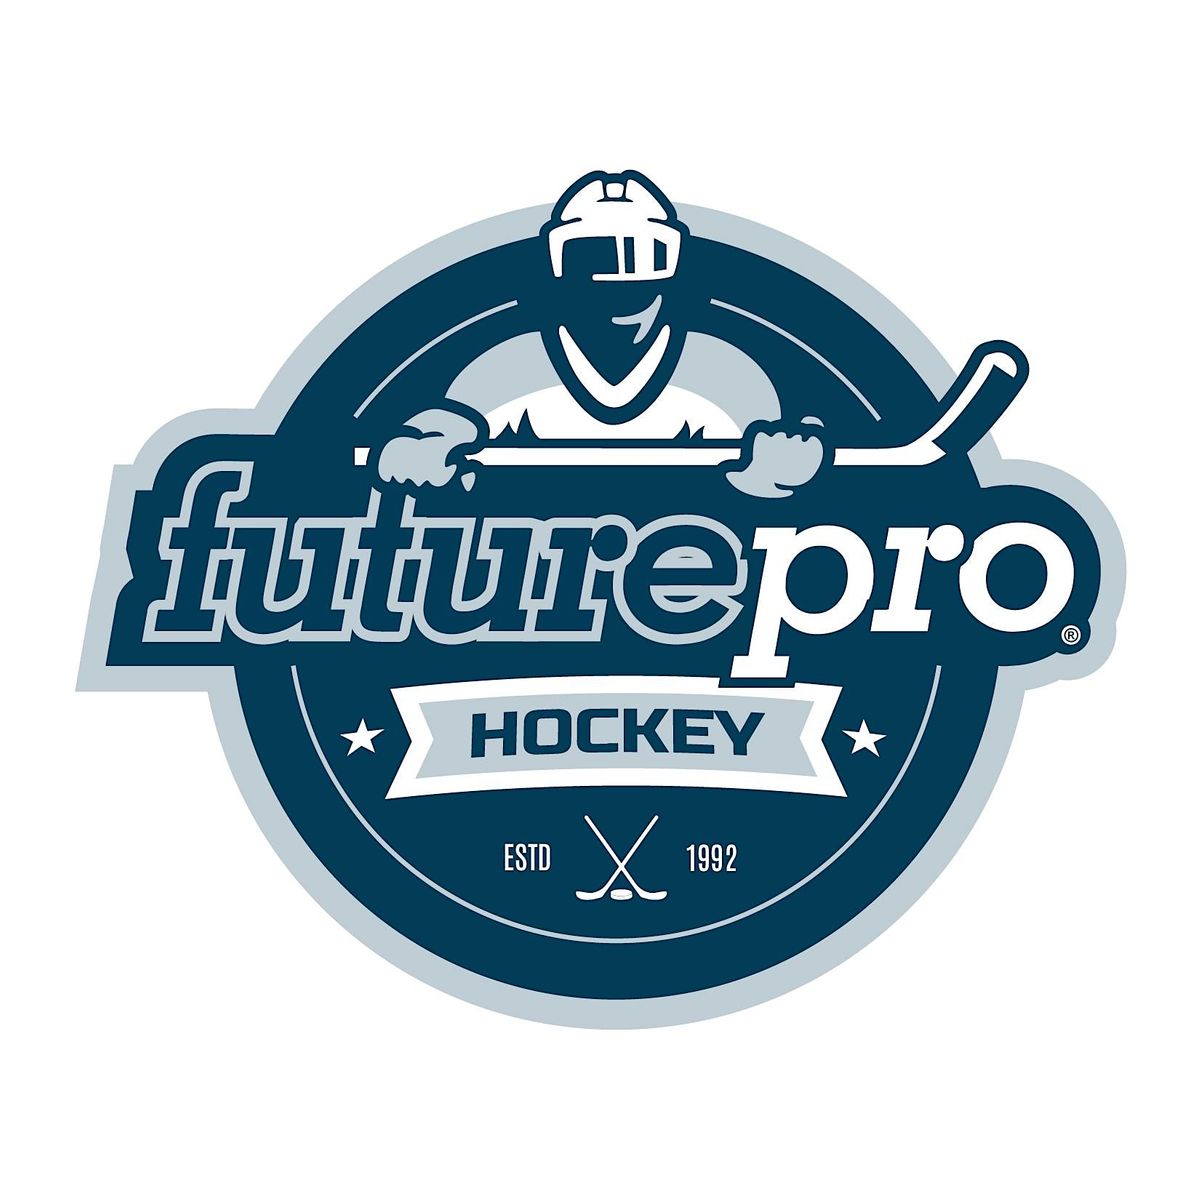 London: Future Pro Hockey Camp